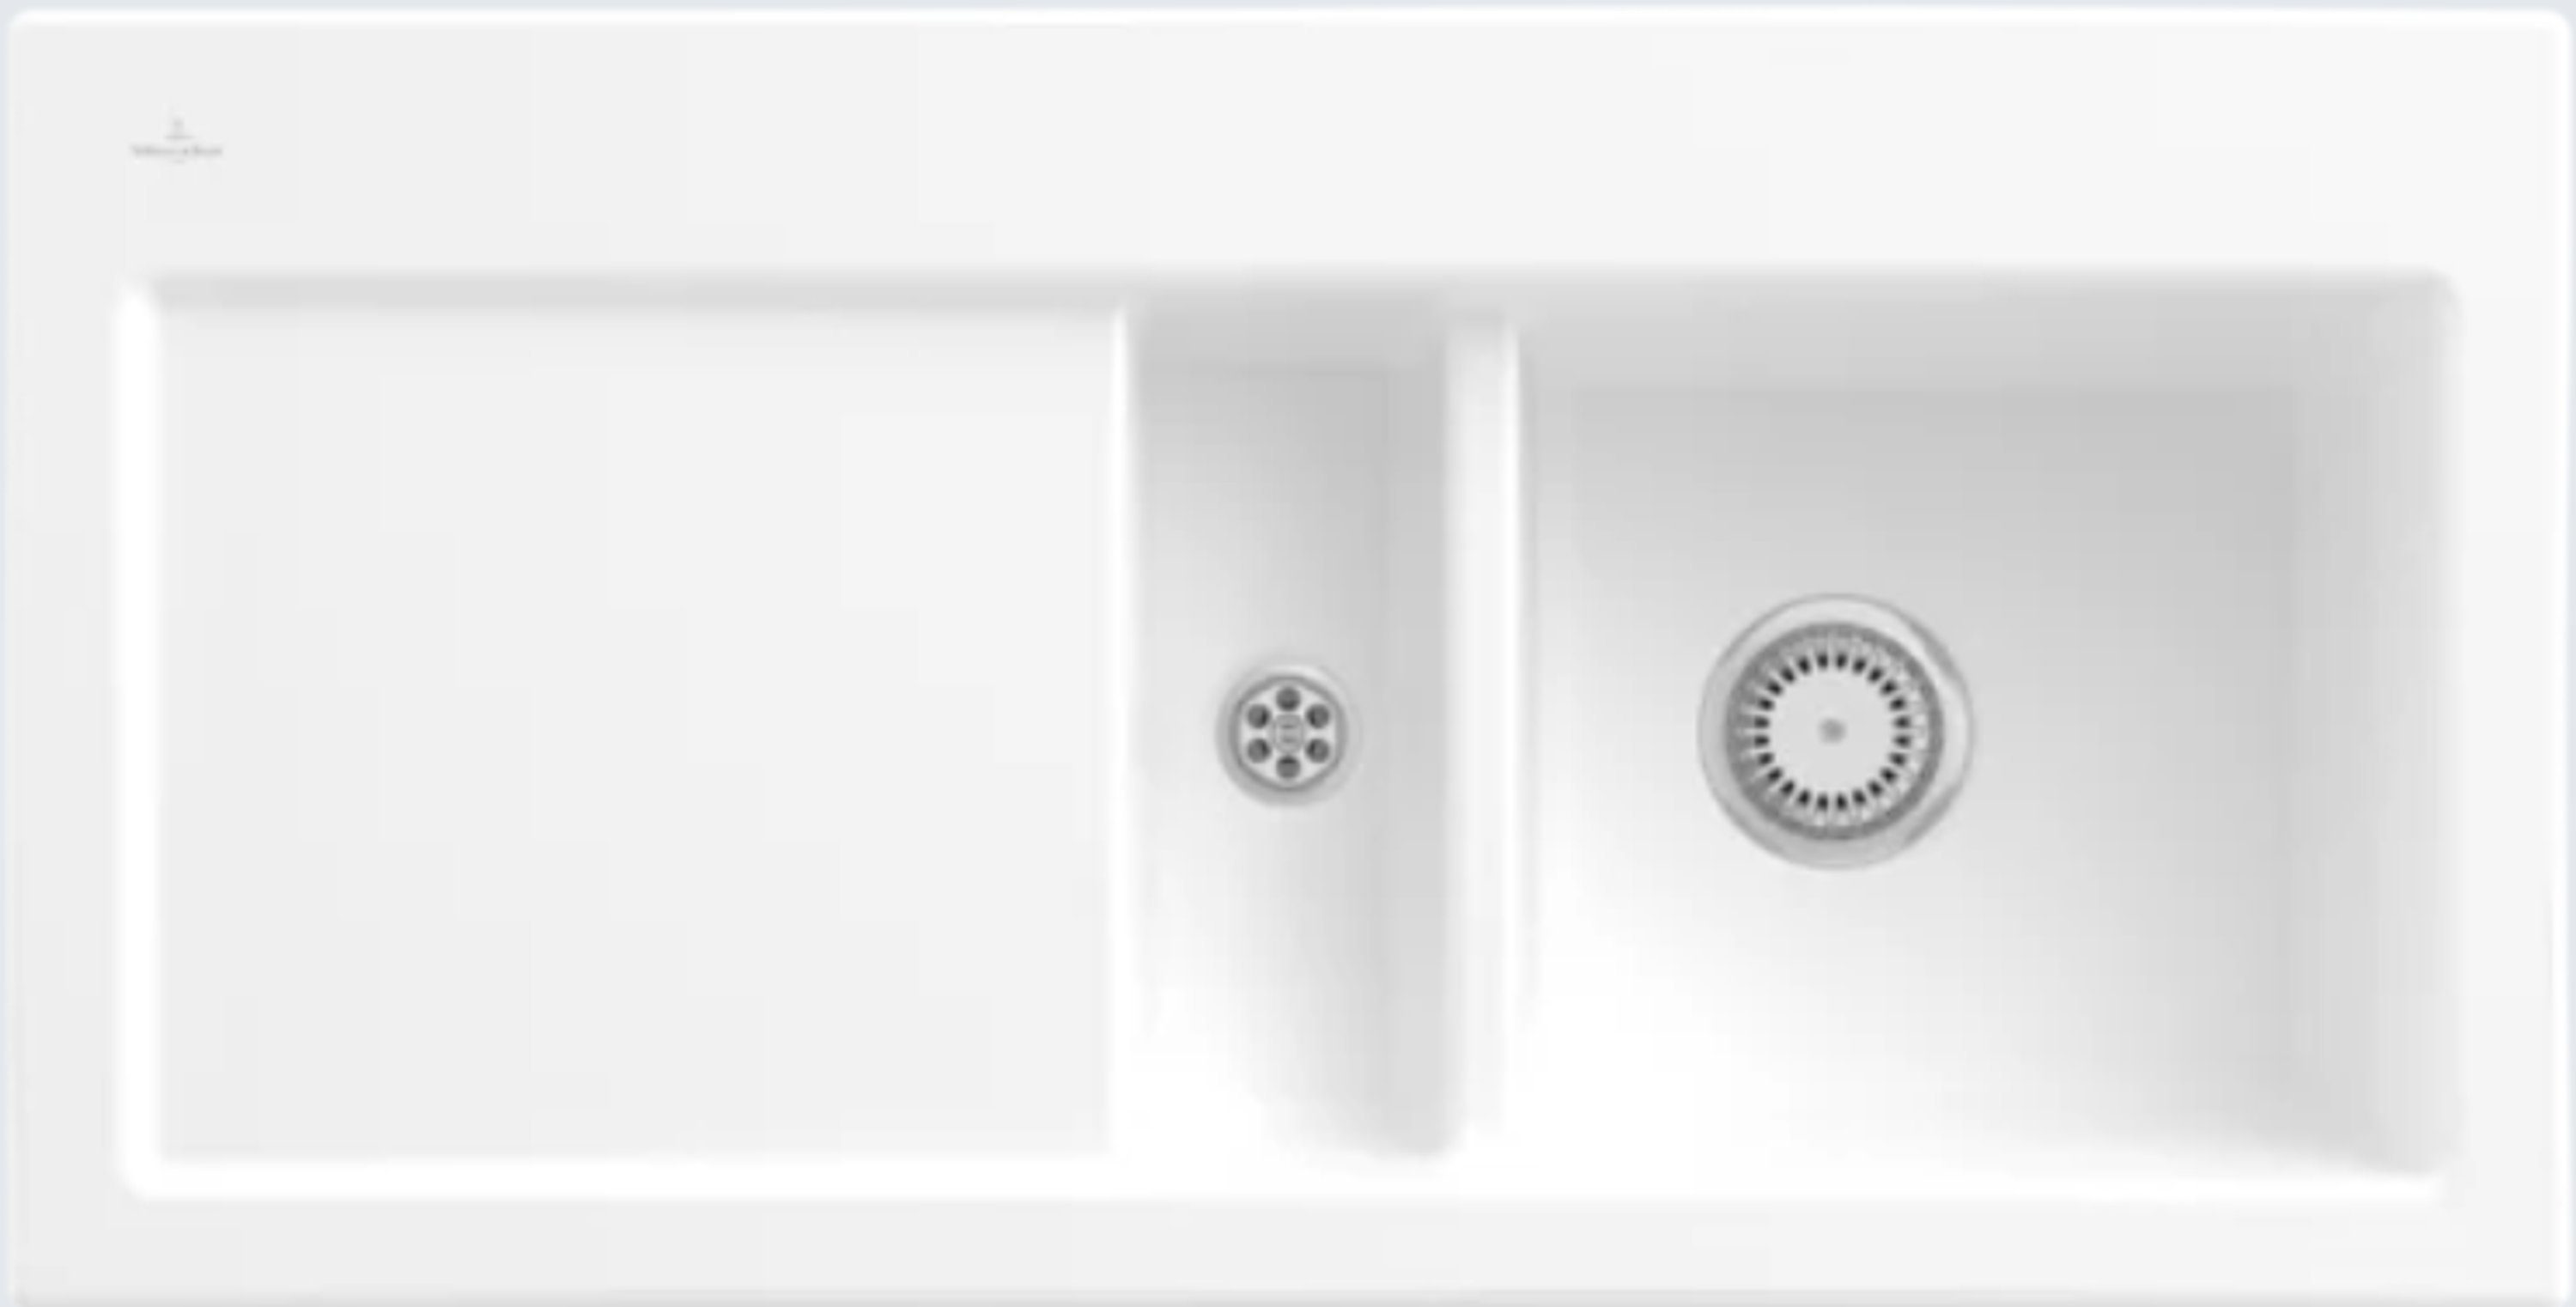 Villeroy & Boch links möglich 6712 cm, Küchenspüle Becken Geschmacksmuster Rechteckig, geschützt, 01 und 100/22 rechts RW